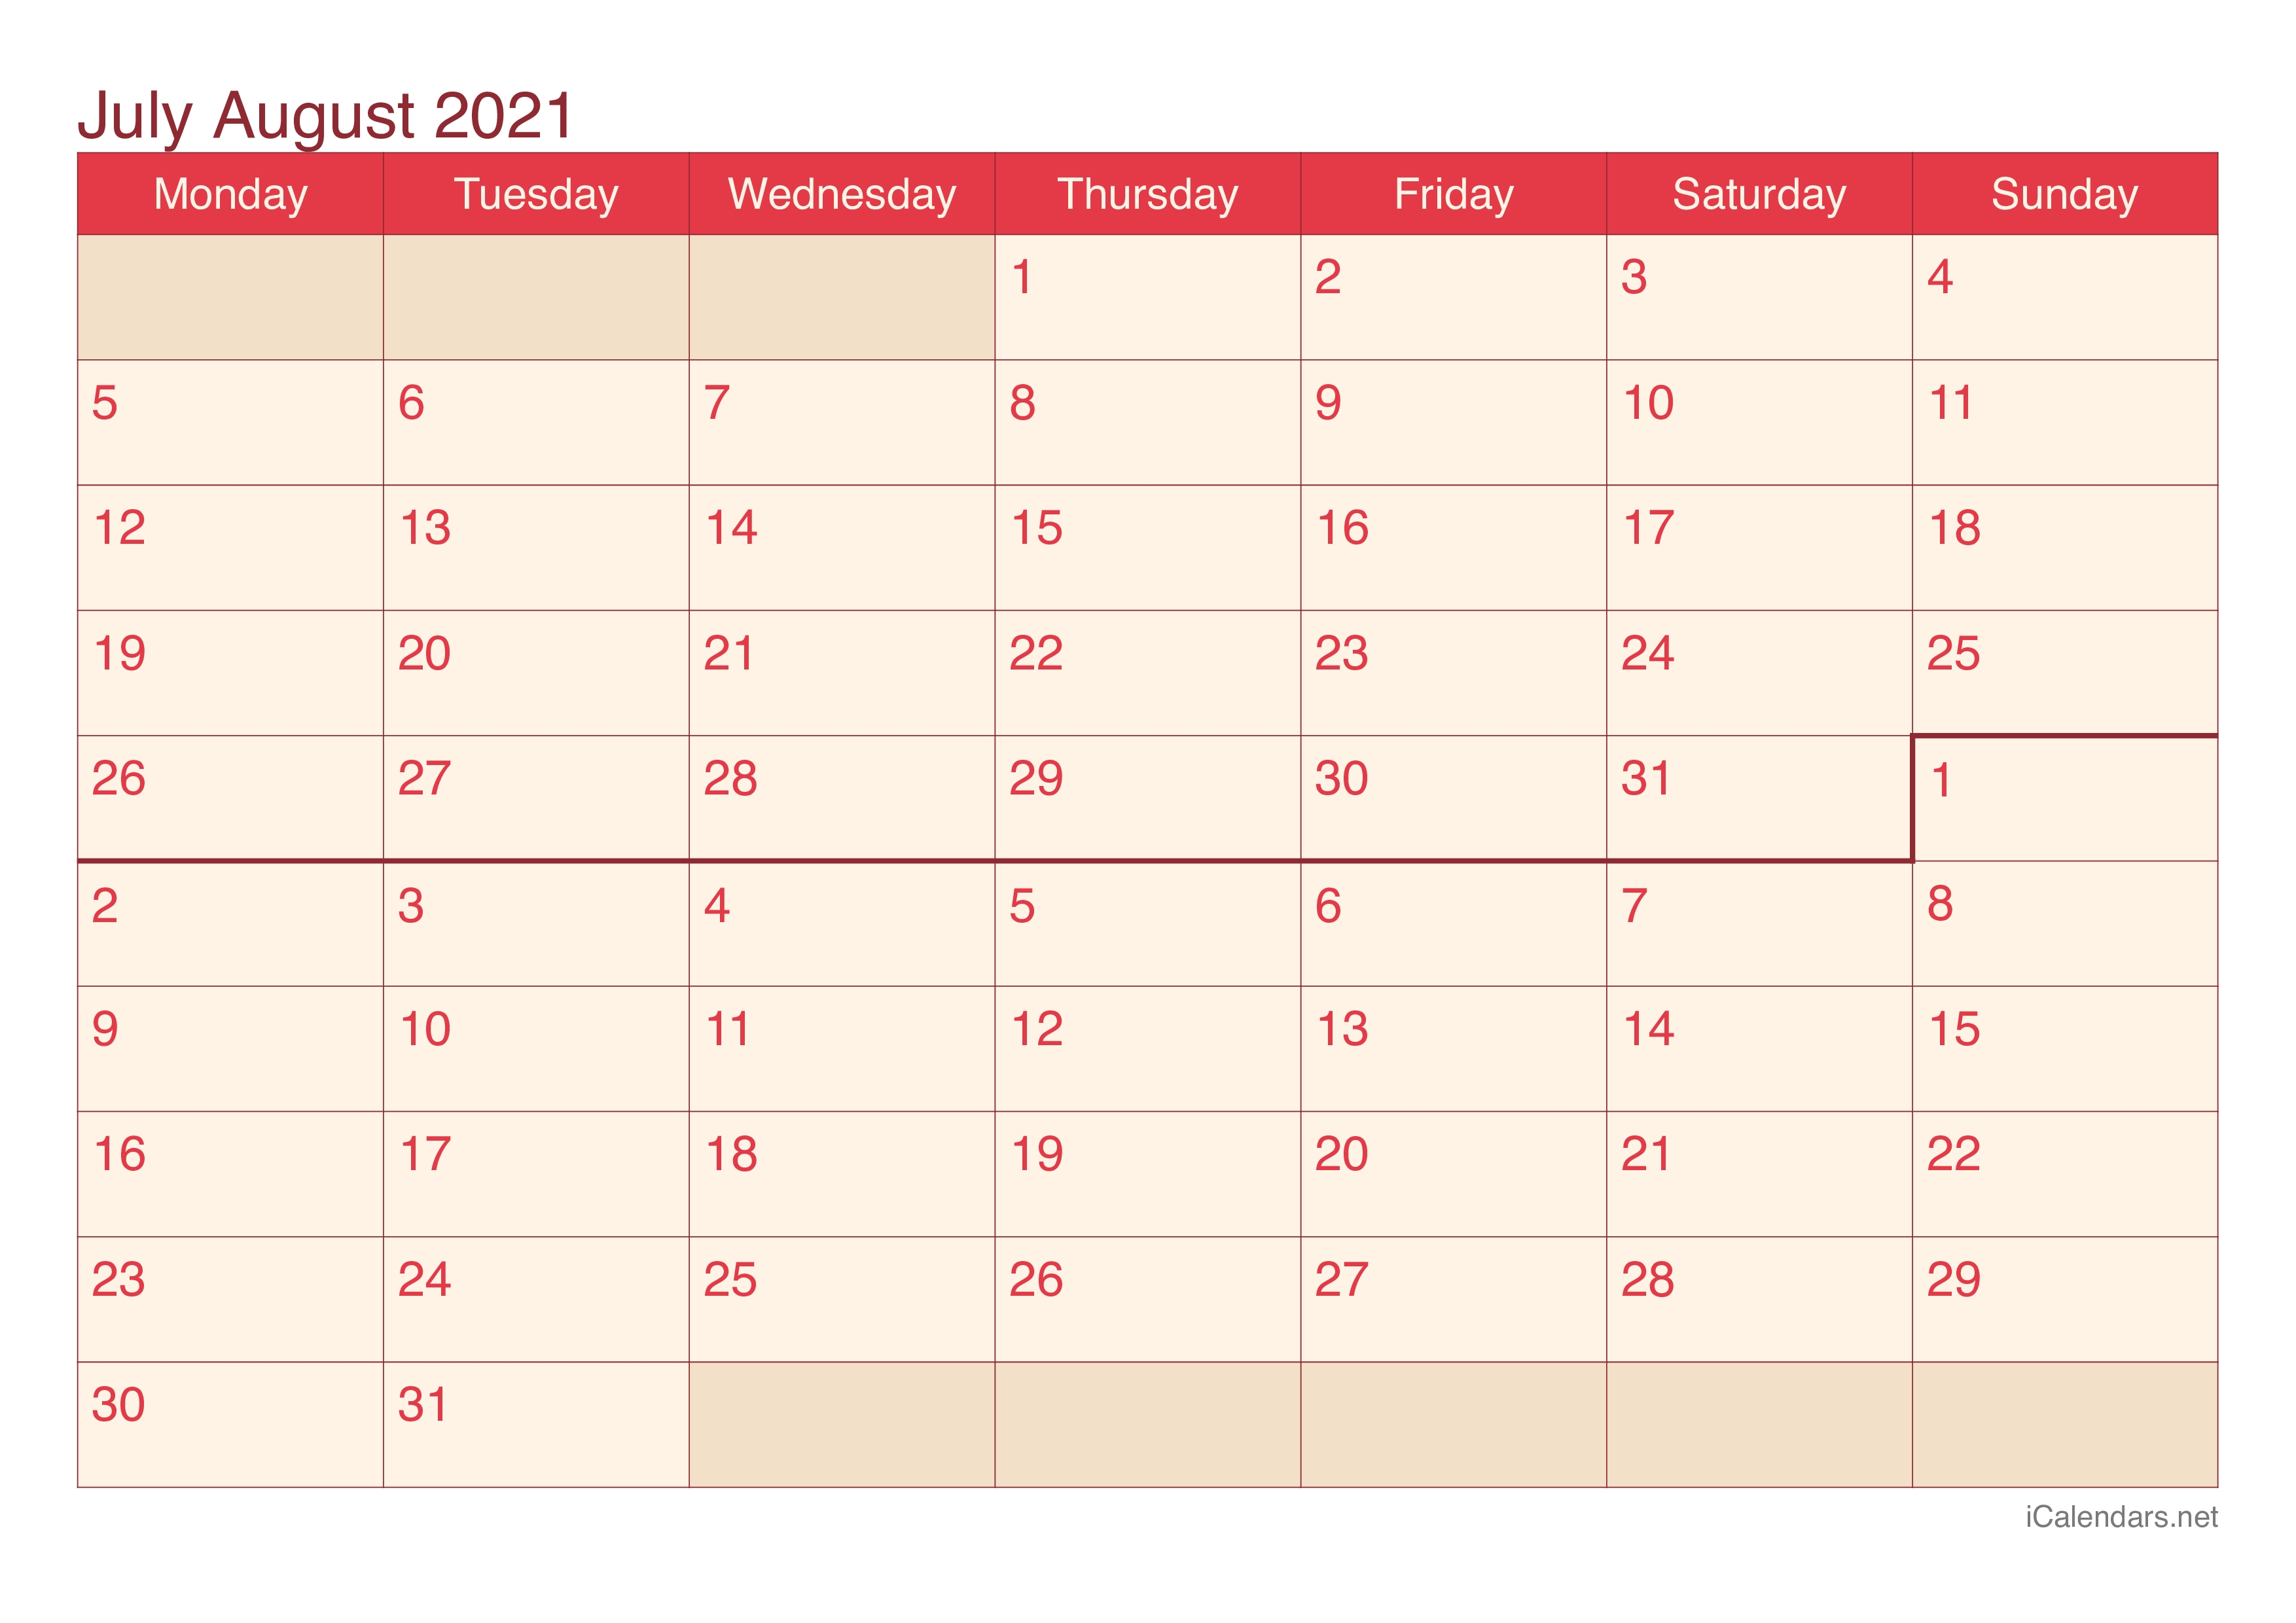 July And August 2021 Printable Calendar - Icalendars Blank Calendar June July August 2021